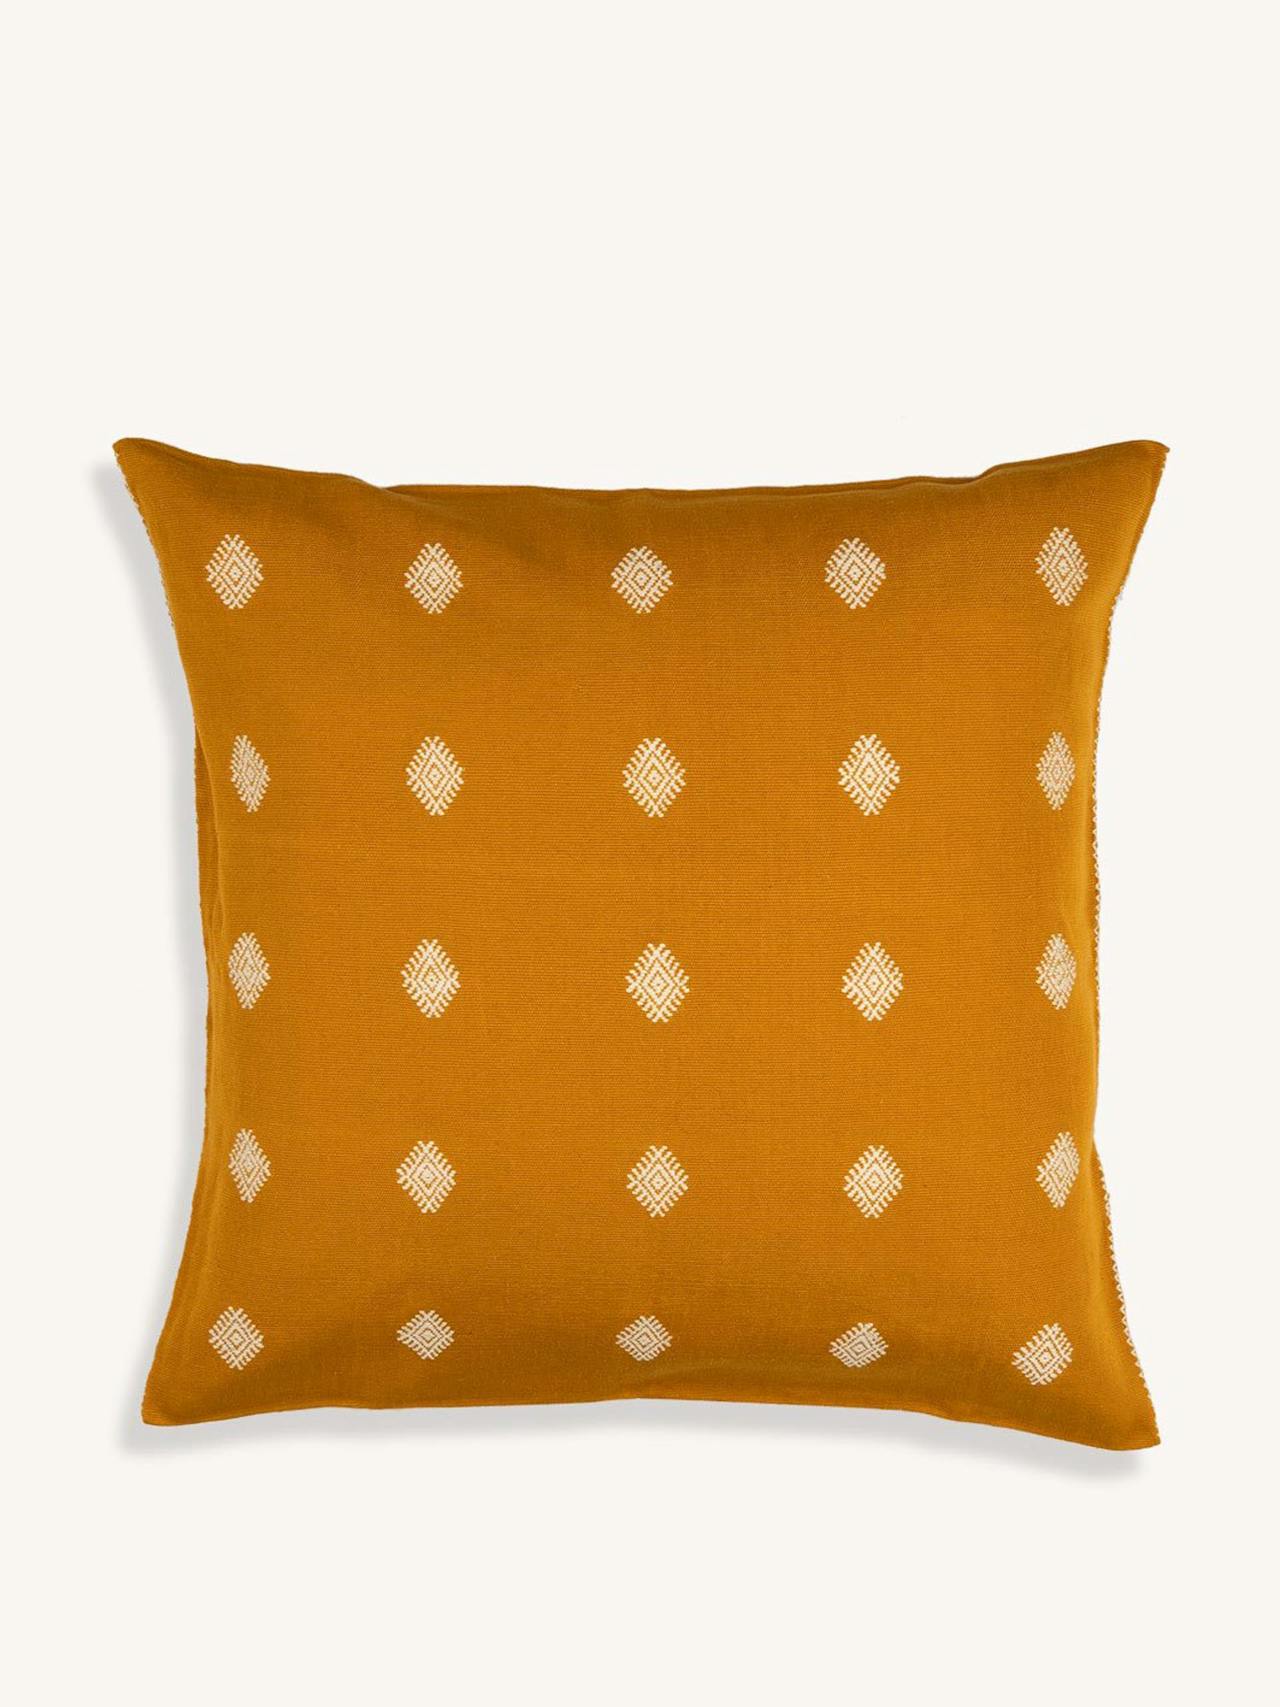 Orange The Path Of The Sun handwoven cushion